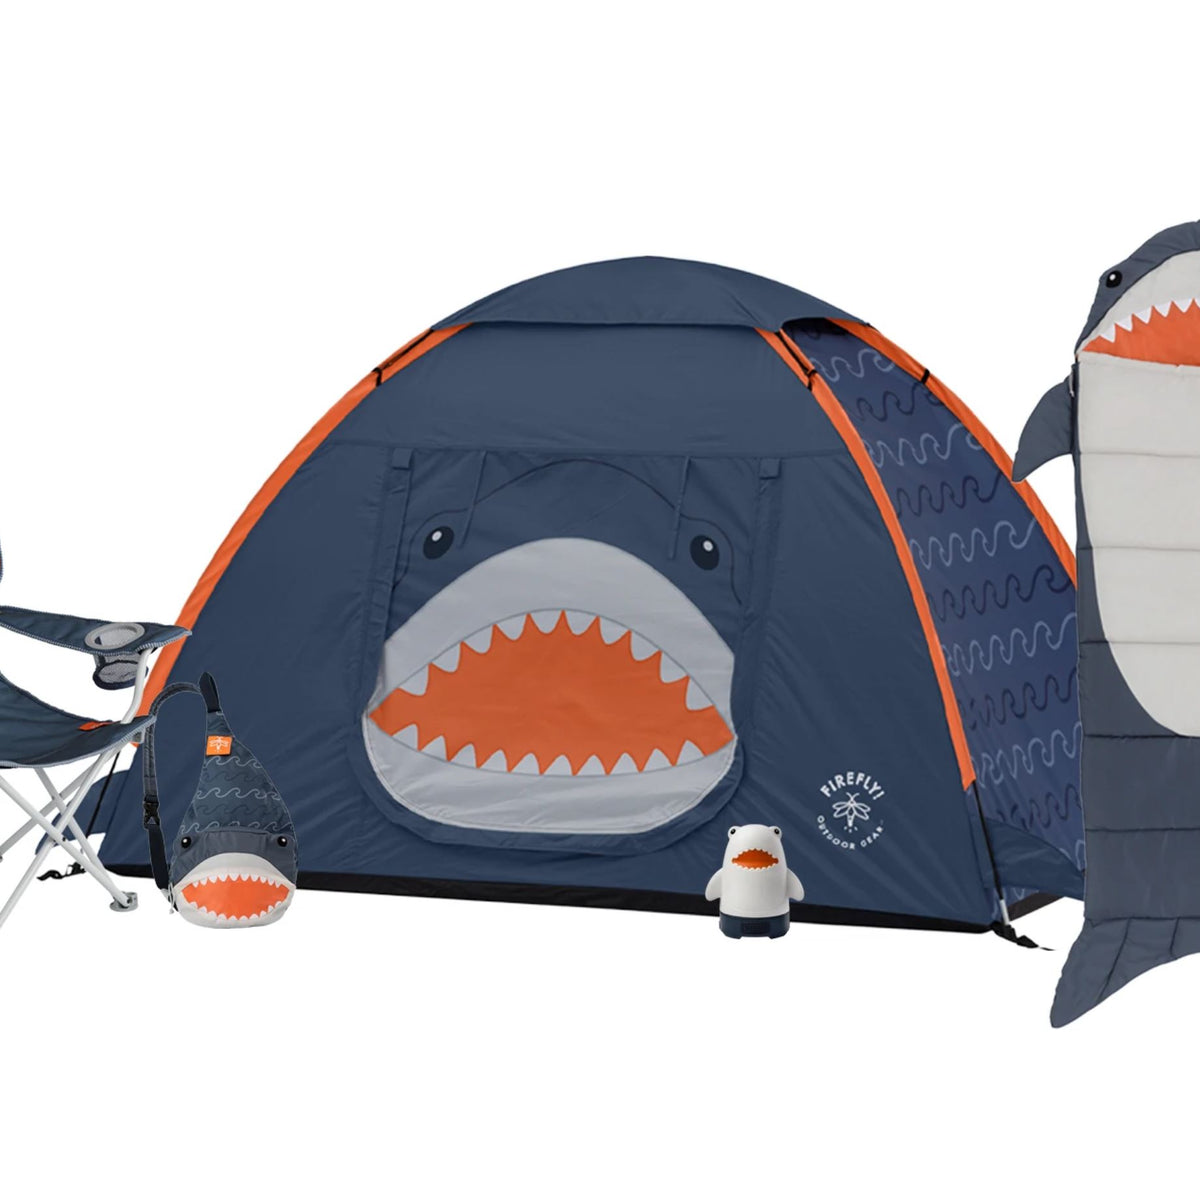 Firefly! Outdoor Gear Finn The Shark Kid's Backpack - Navy Blue (15 liter), Unisex, Size: 15L